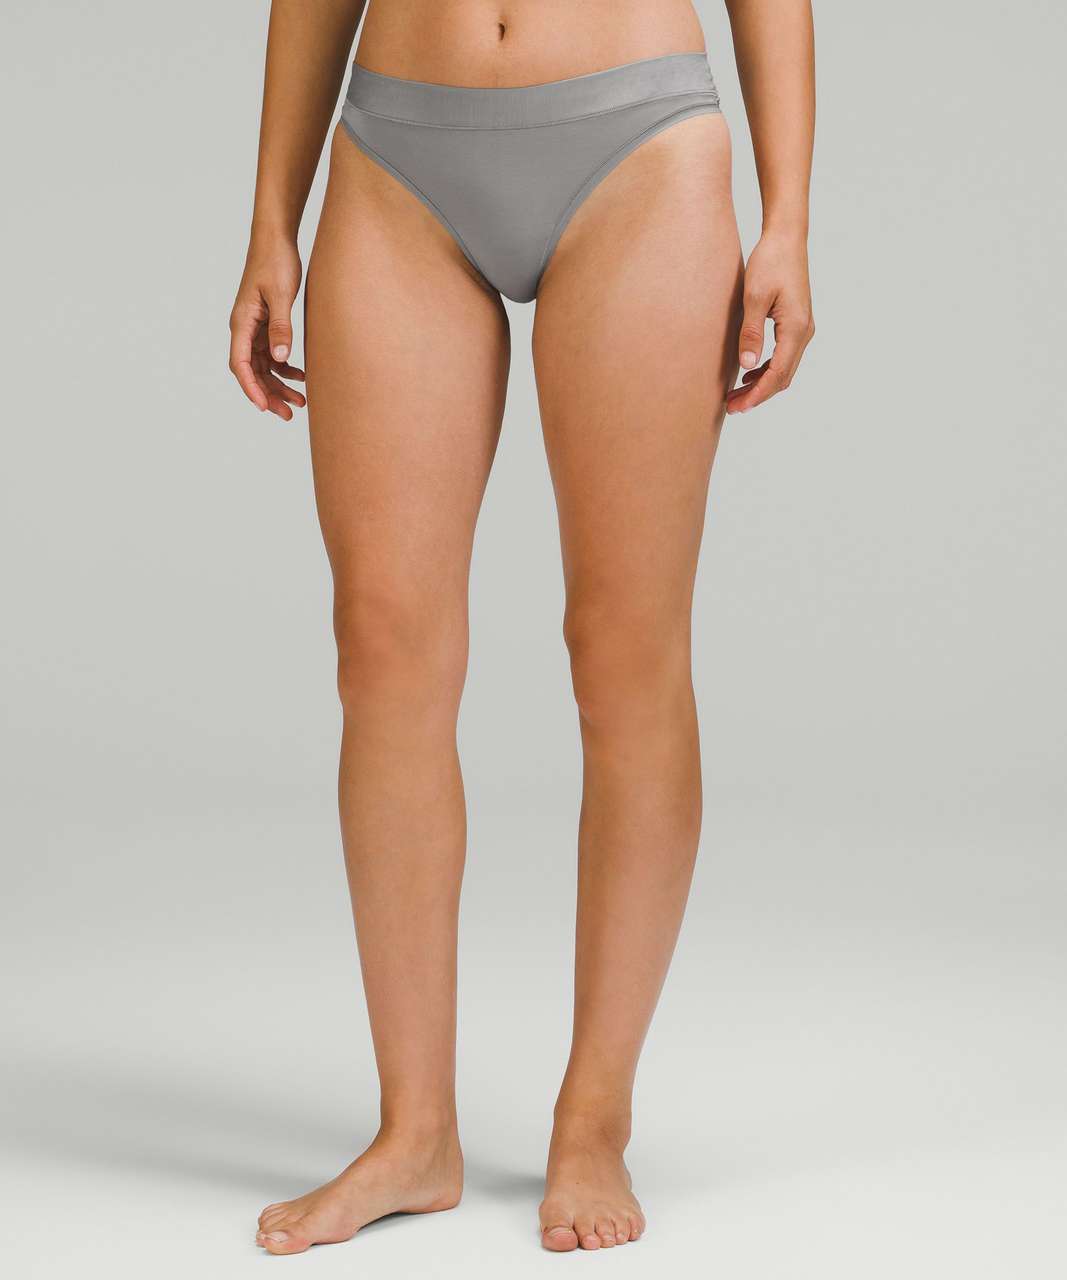 Lululemon UnderEase Mid-Rise Thong Underwear 3 Pack - Primal Dot Mini Brier Rose Multi / Gull Grey / Brier Rose